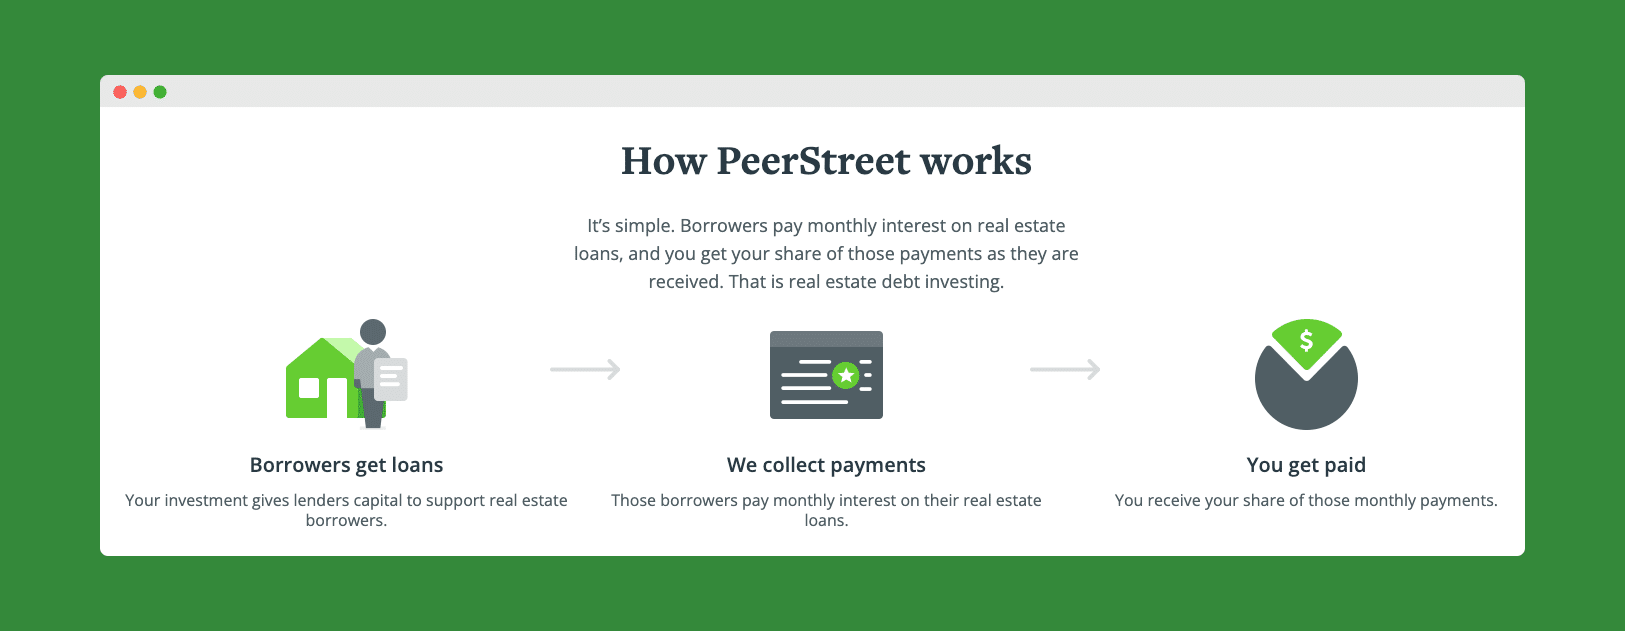 How Does PeerStreet Make Money